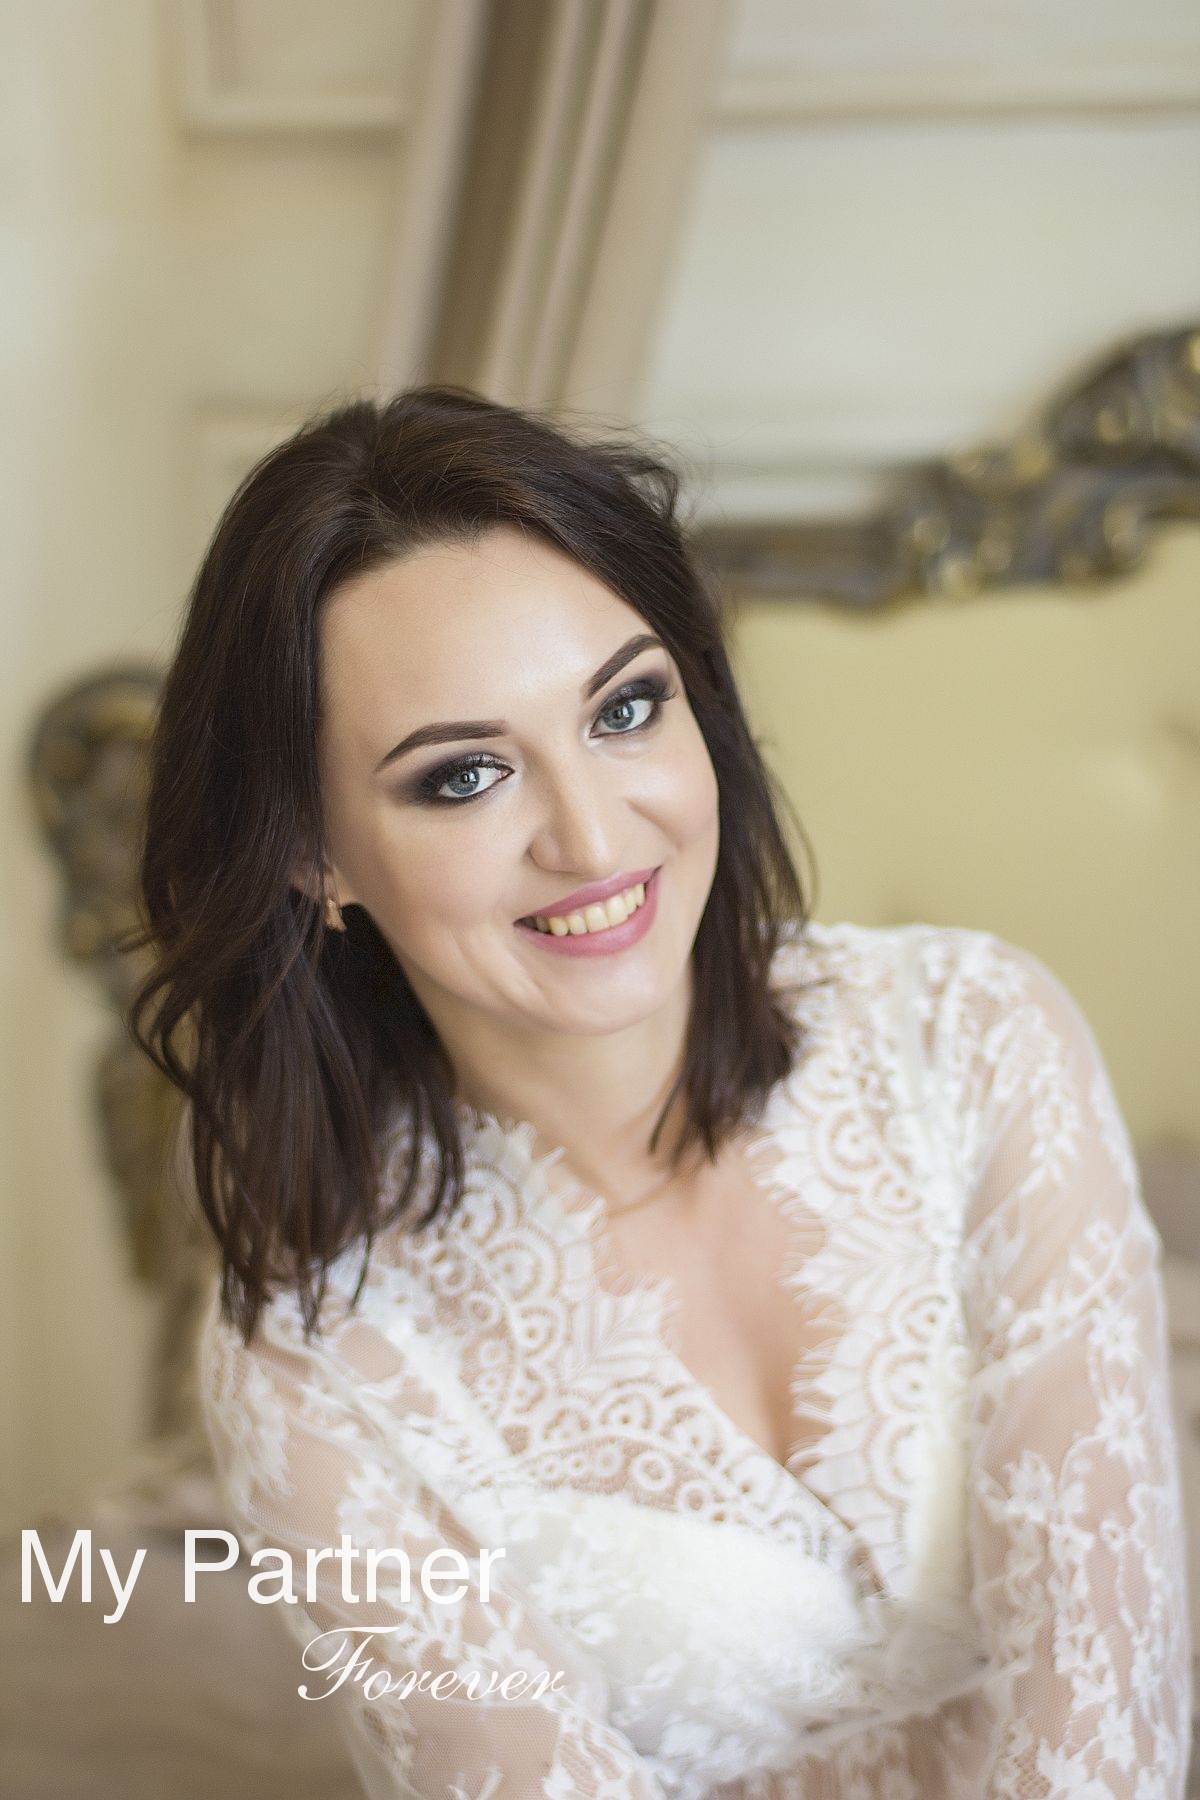 Dating Site to Meet Stunning Ukrainian Lady Anna from Kiev, Ukraine